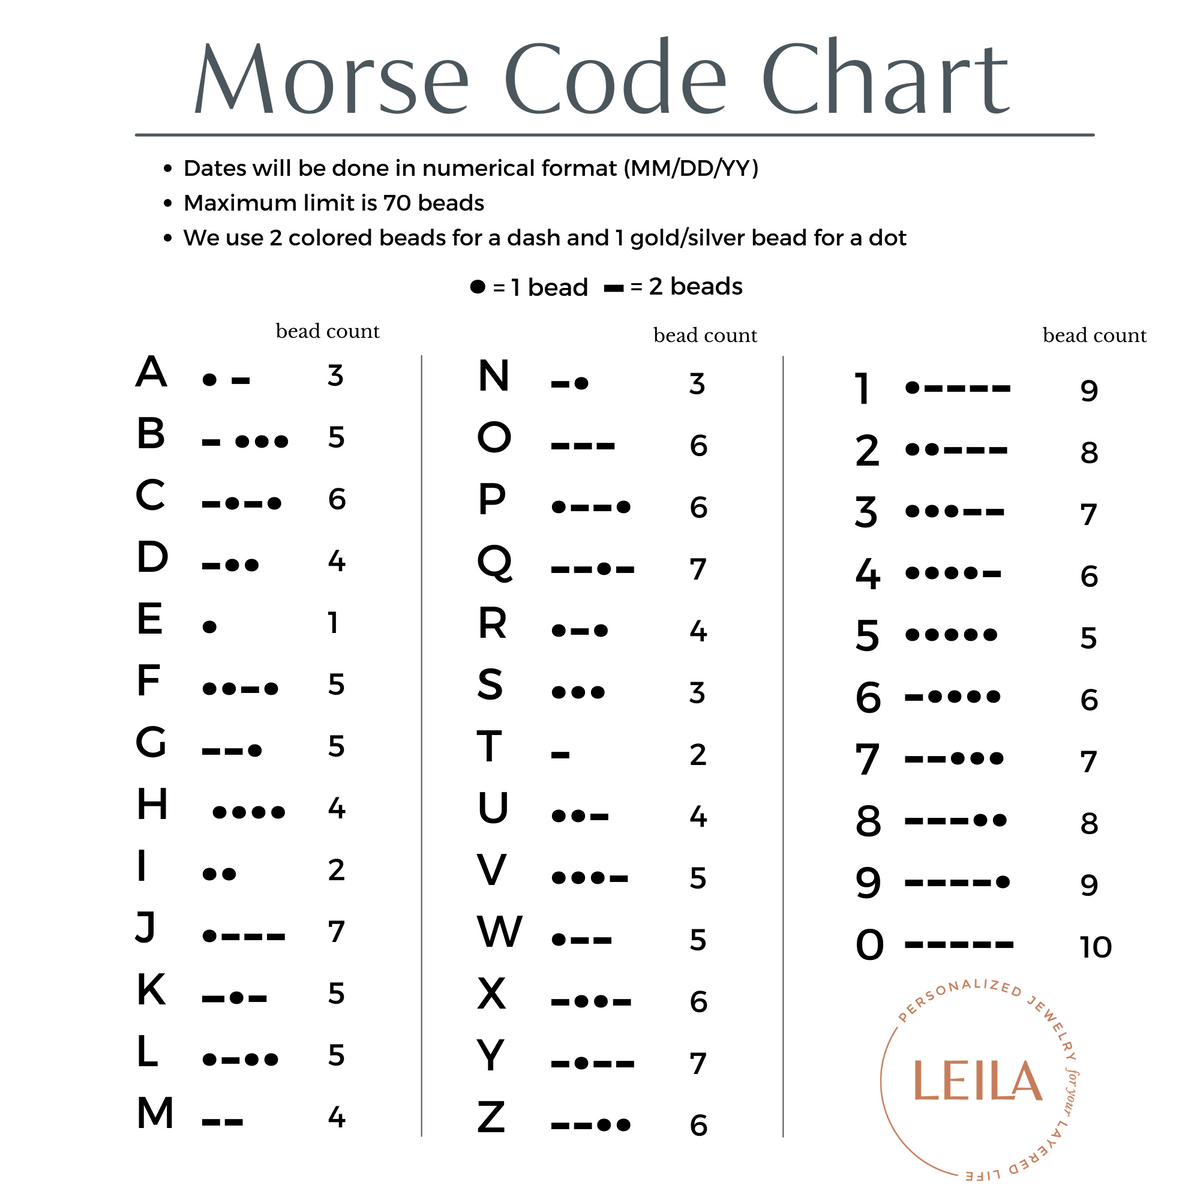 Custom Morse Code Necklace